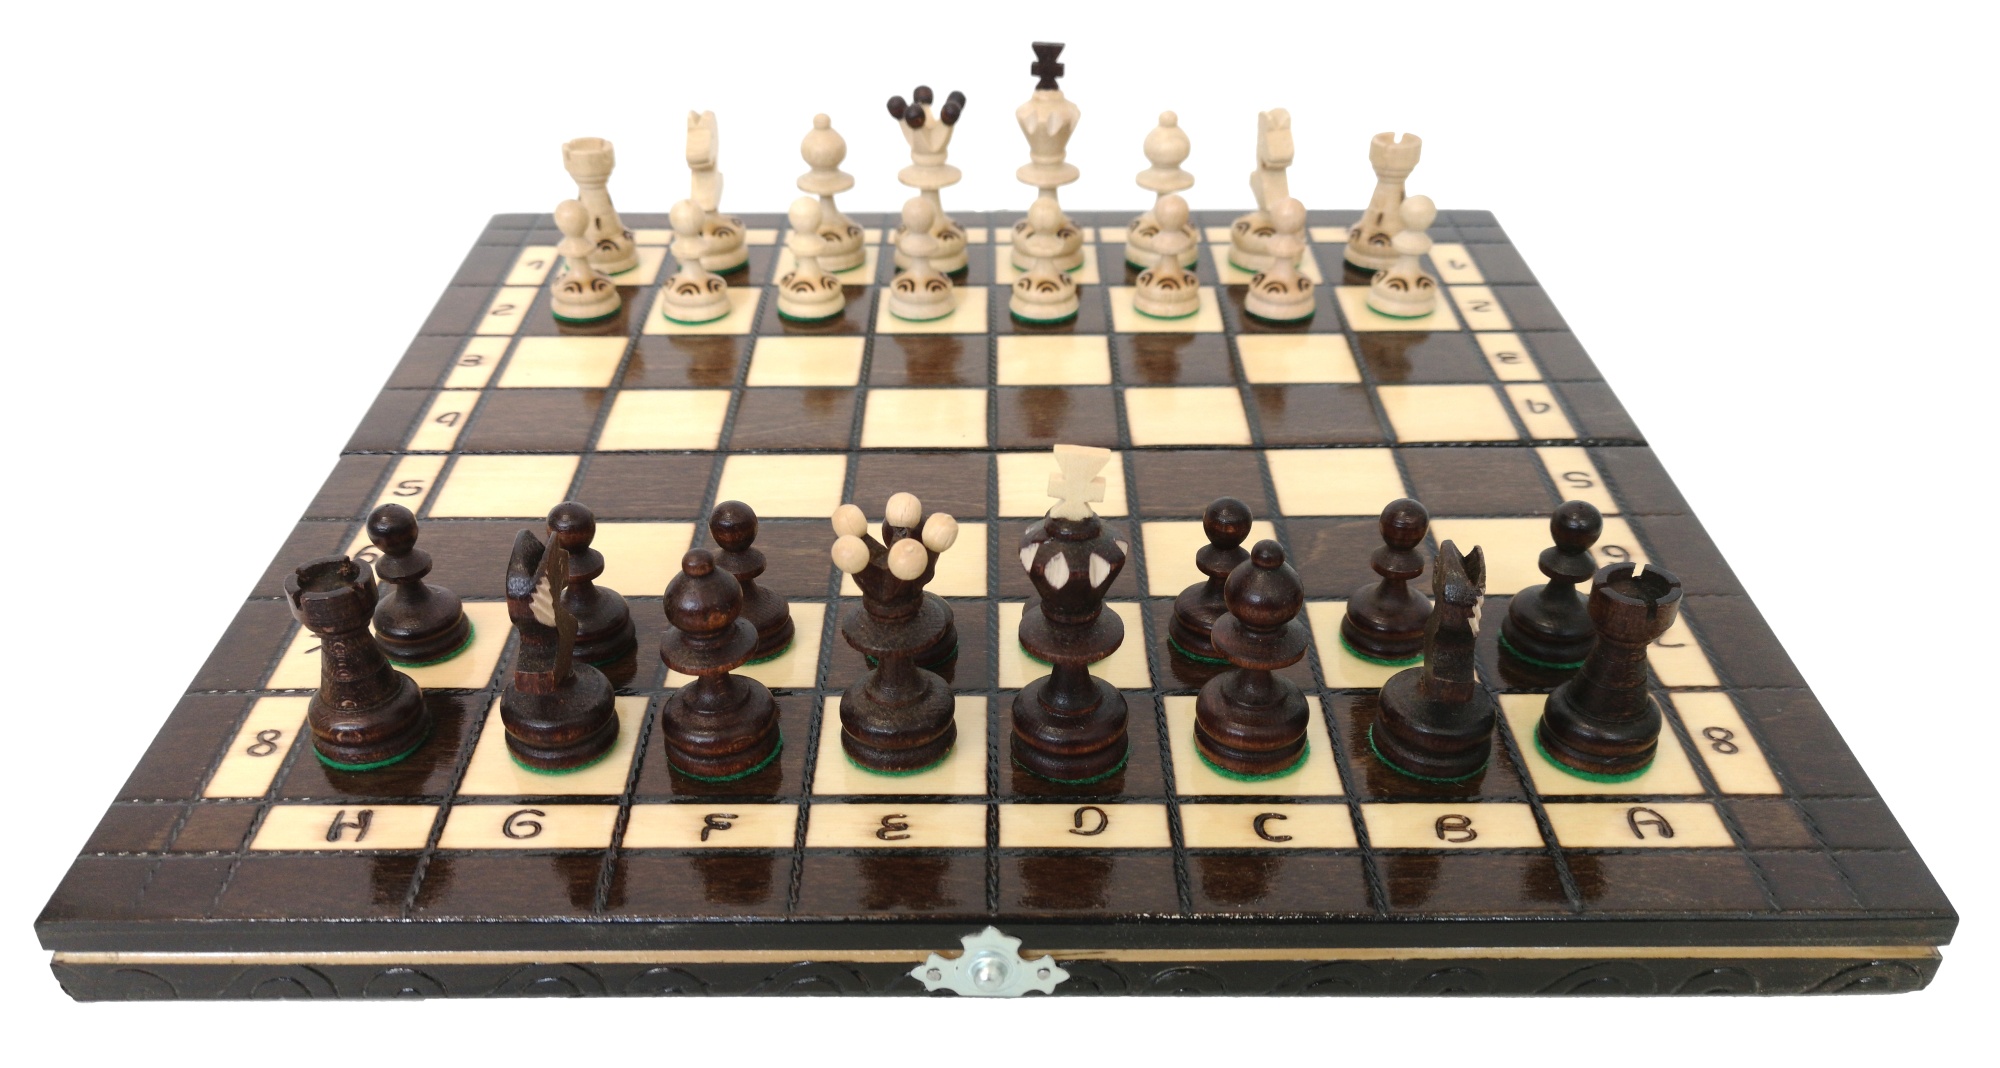 Dřevěné šachy 34 x 34 cm